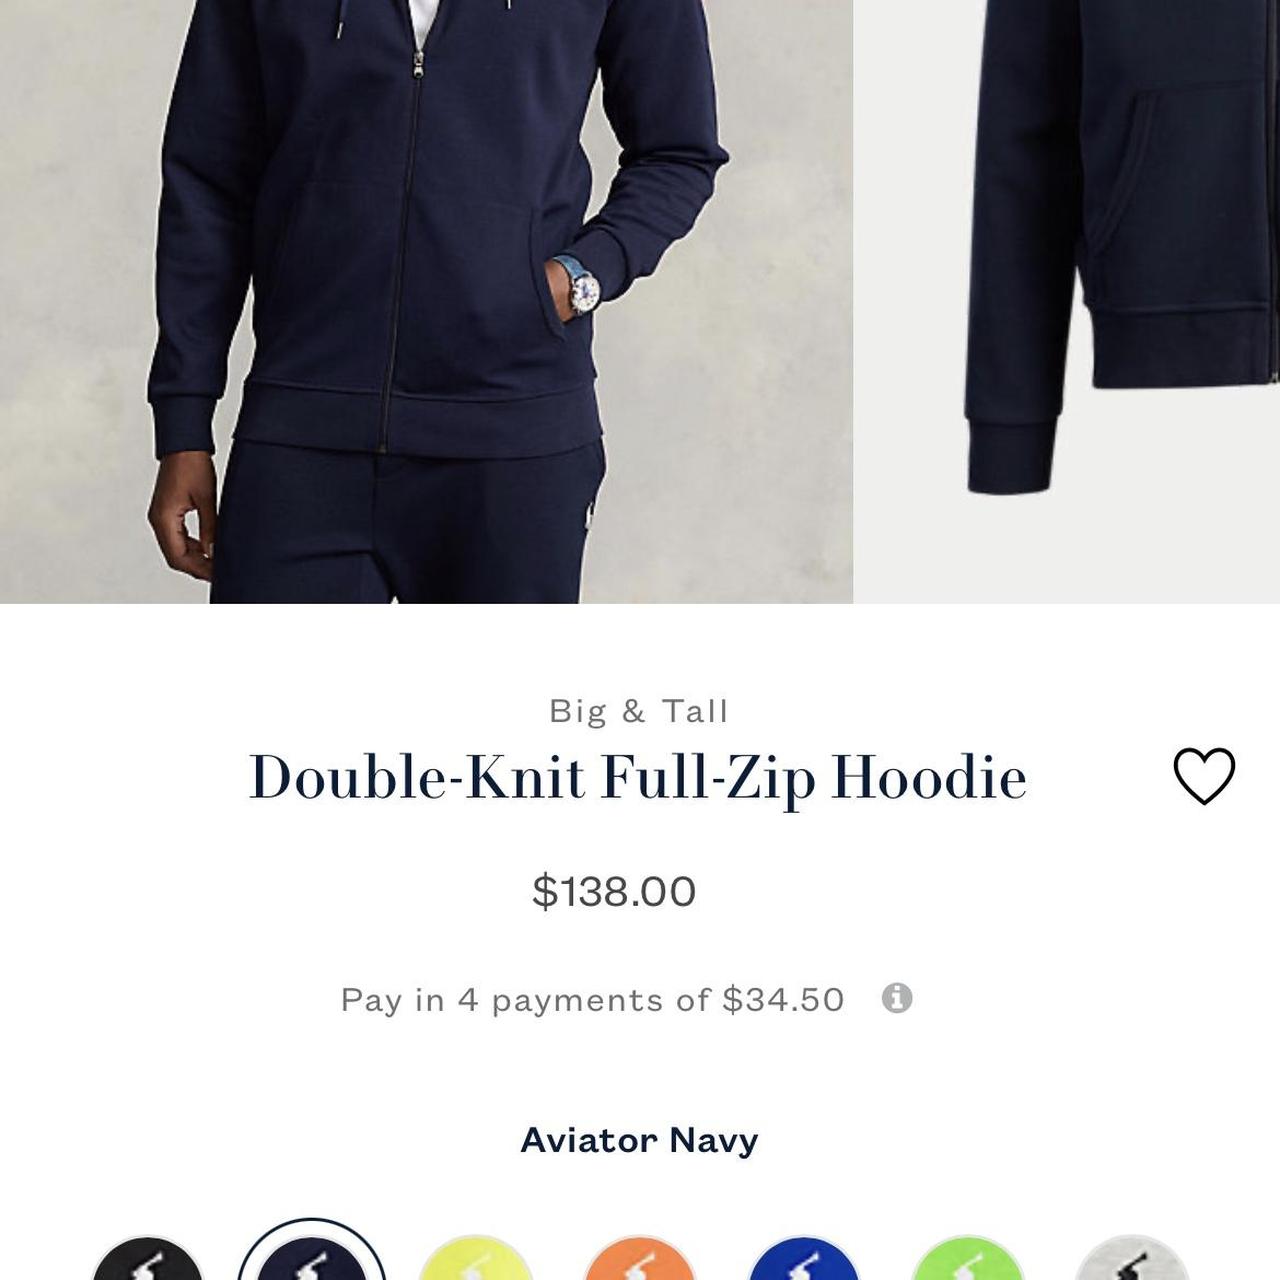 Polo Ralph Lauren Big & Tall Double-Knit Full-Zip Hoodie, Aviator